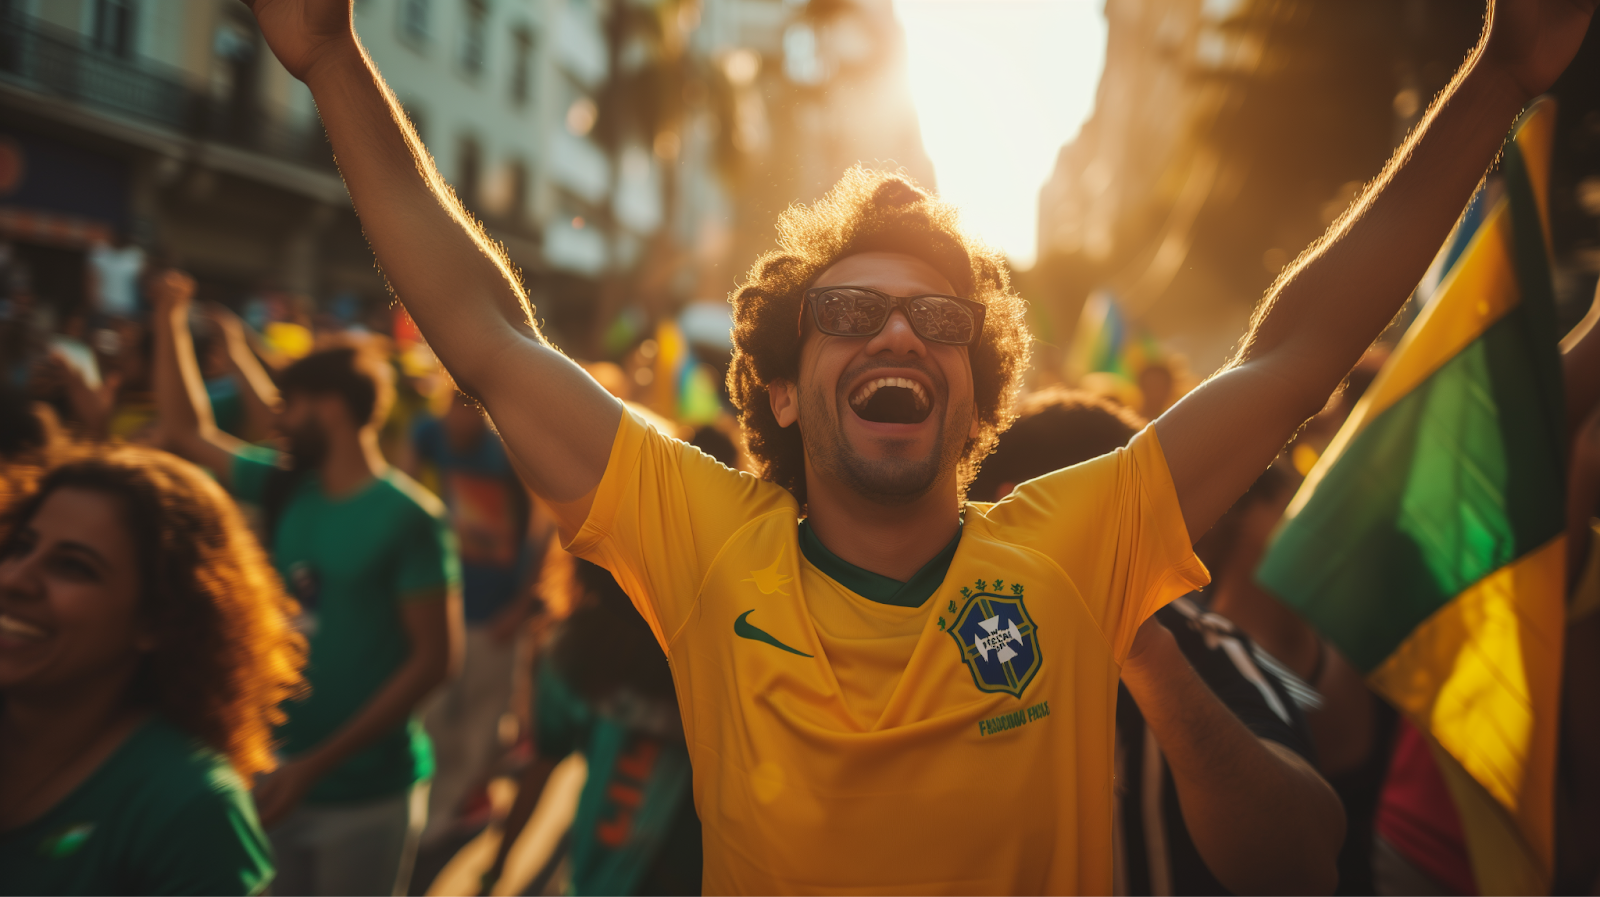 Football fans celebrating in FIFA World Cup city Rio de Janeiro's streets.